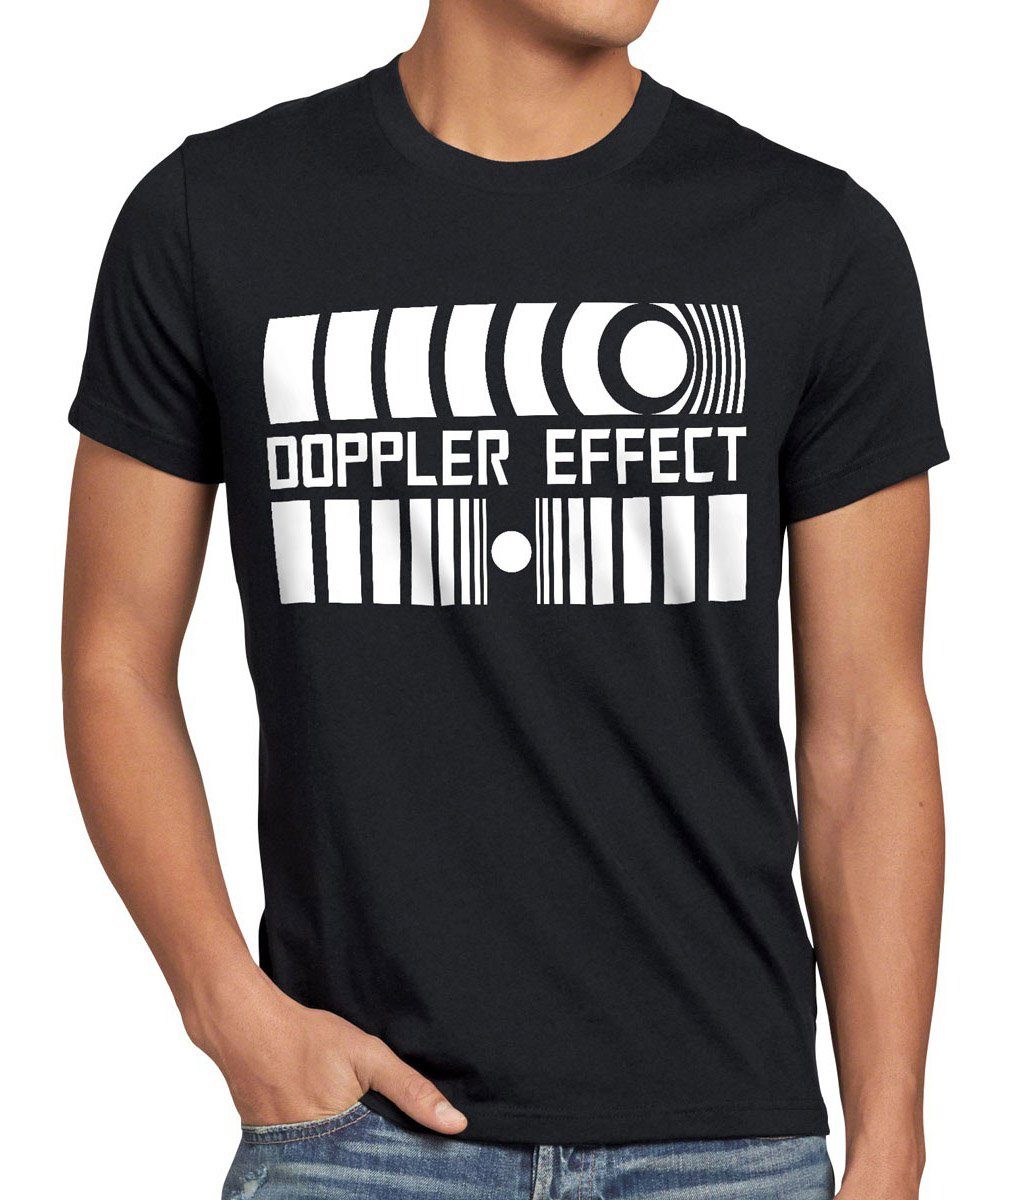 T-Shirt Bang schwarz Herren style3 Effects tbbt Big Print-Shirt Sheldon Schall Effekt Doppler Theory Cooper